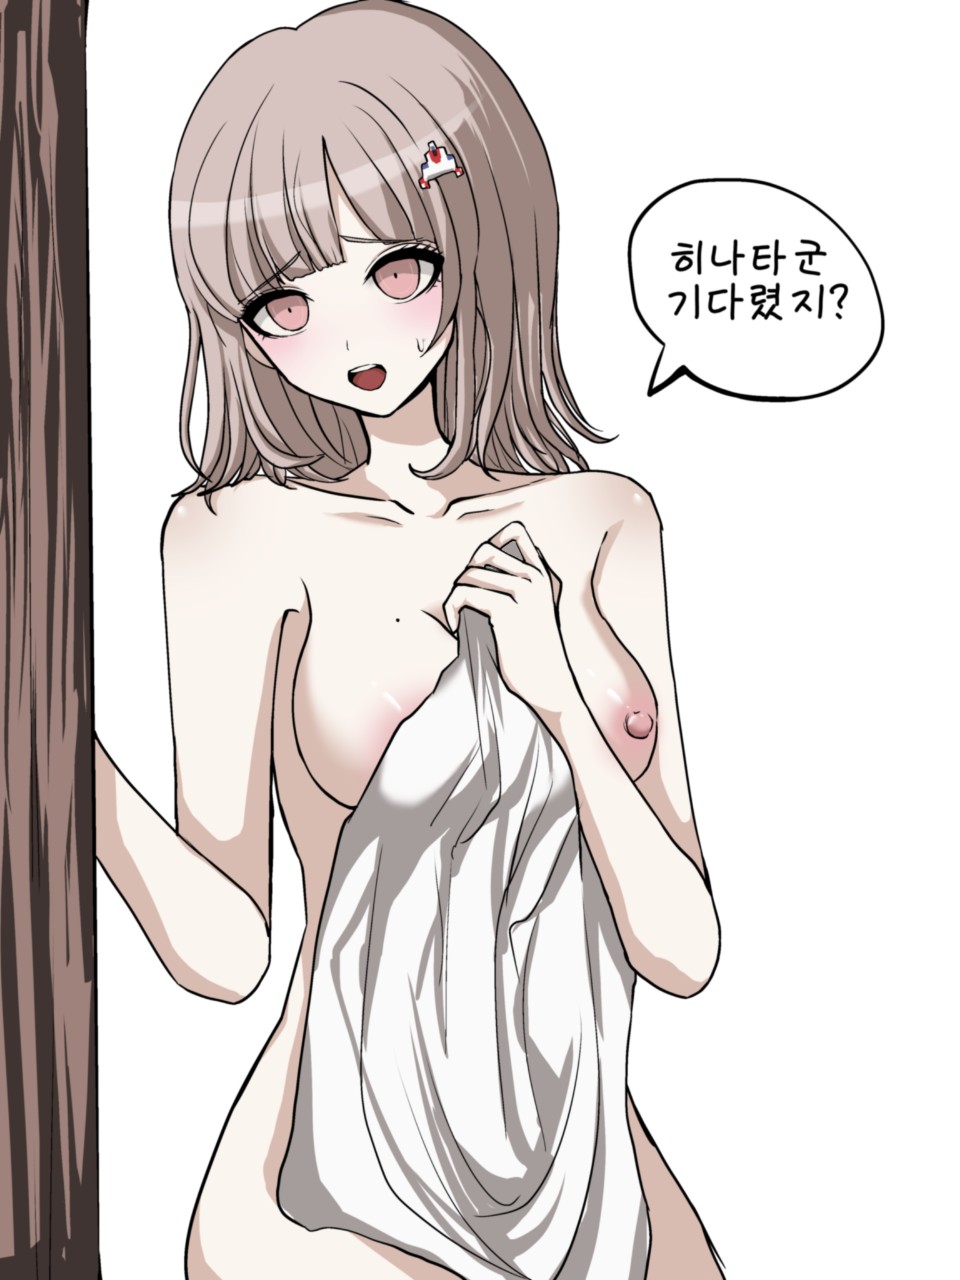 Chiaki nanami nude